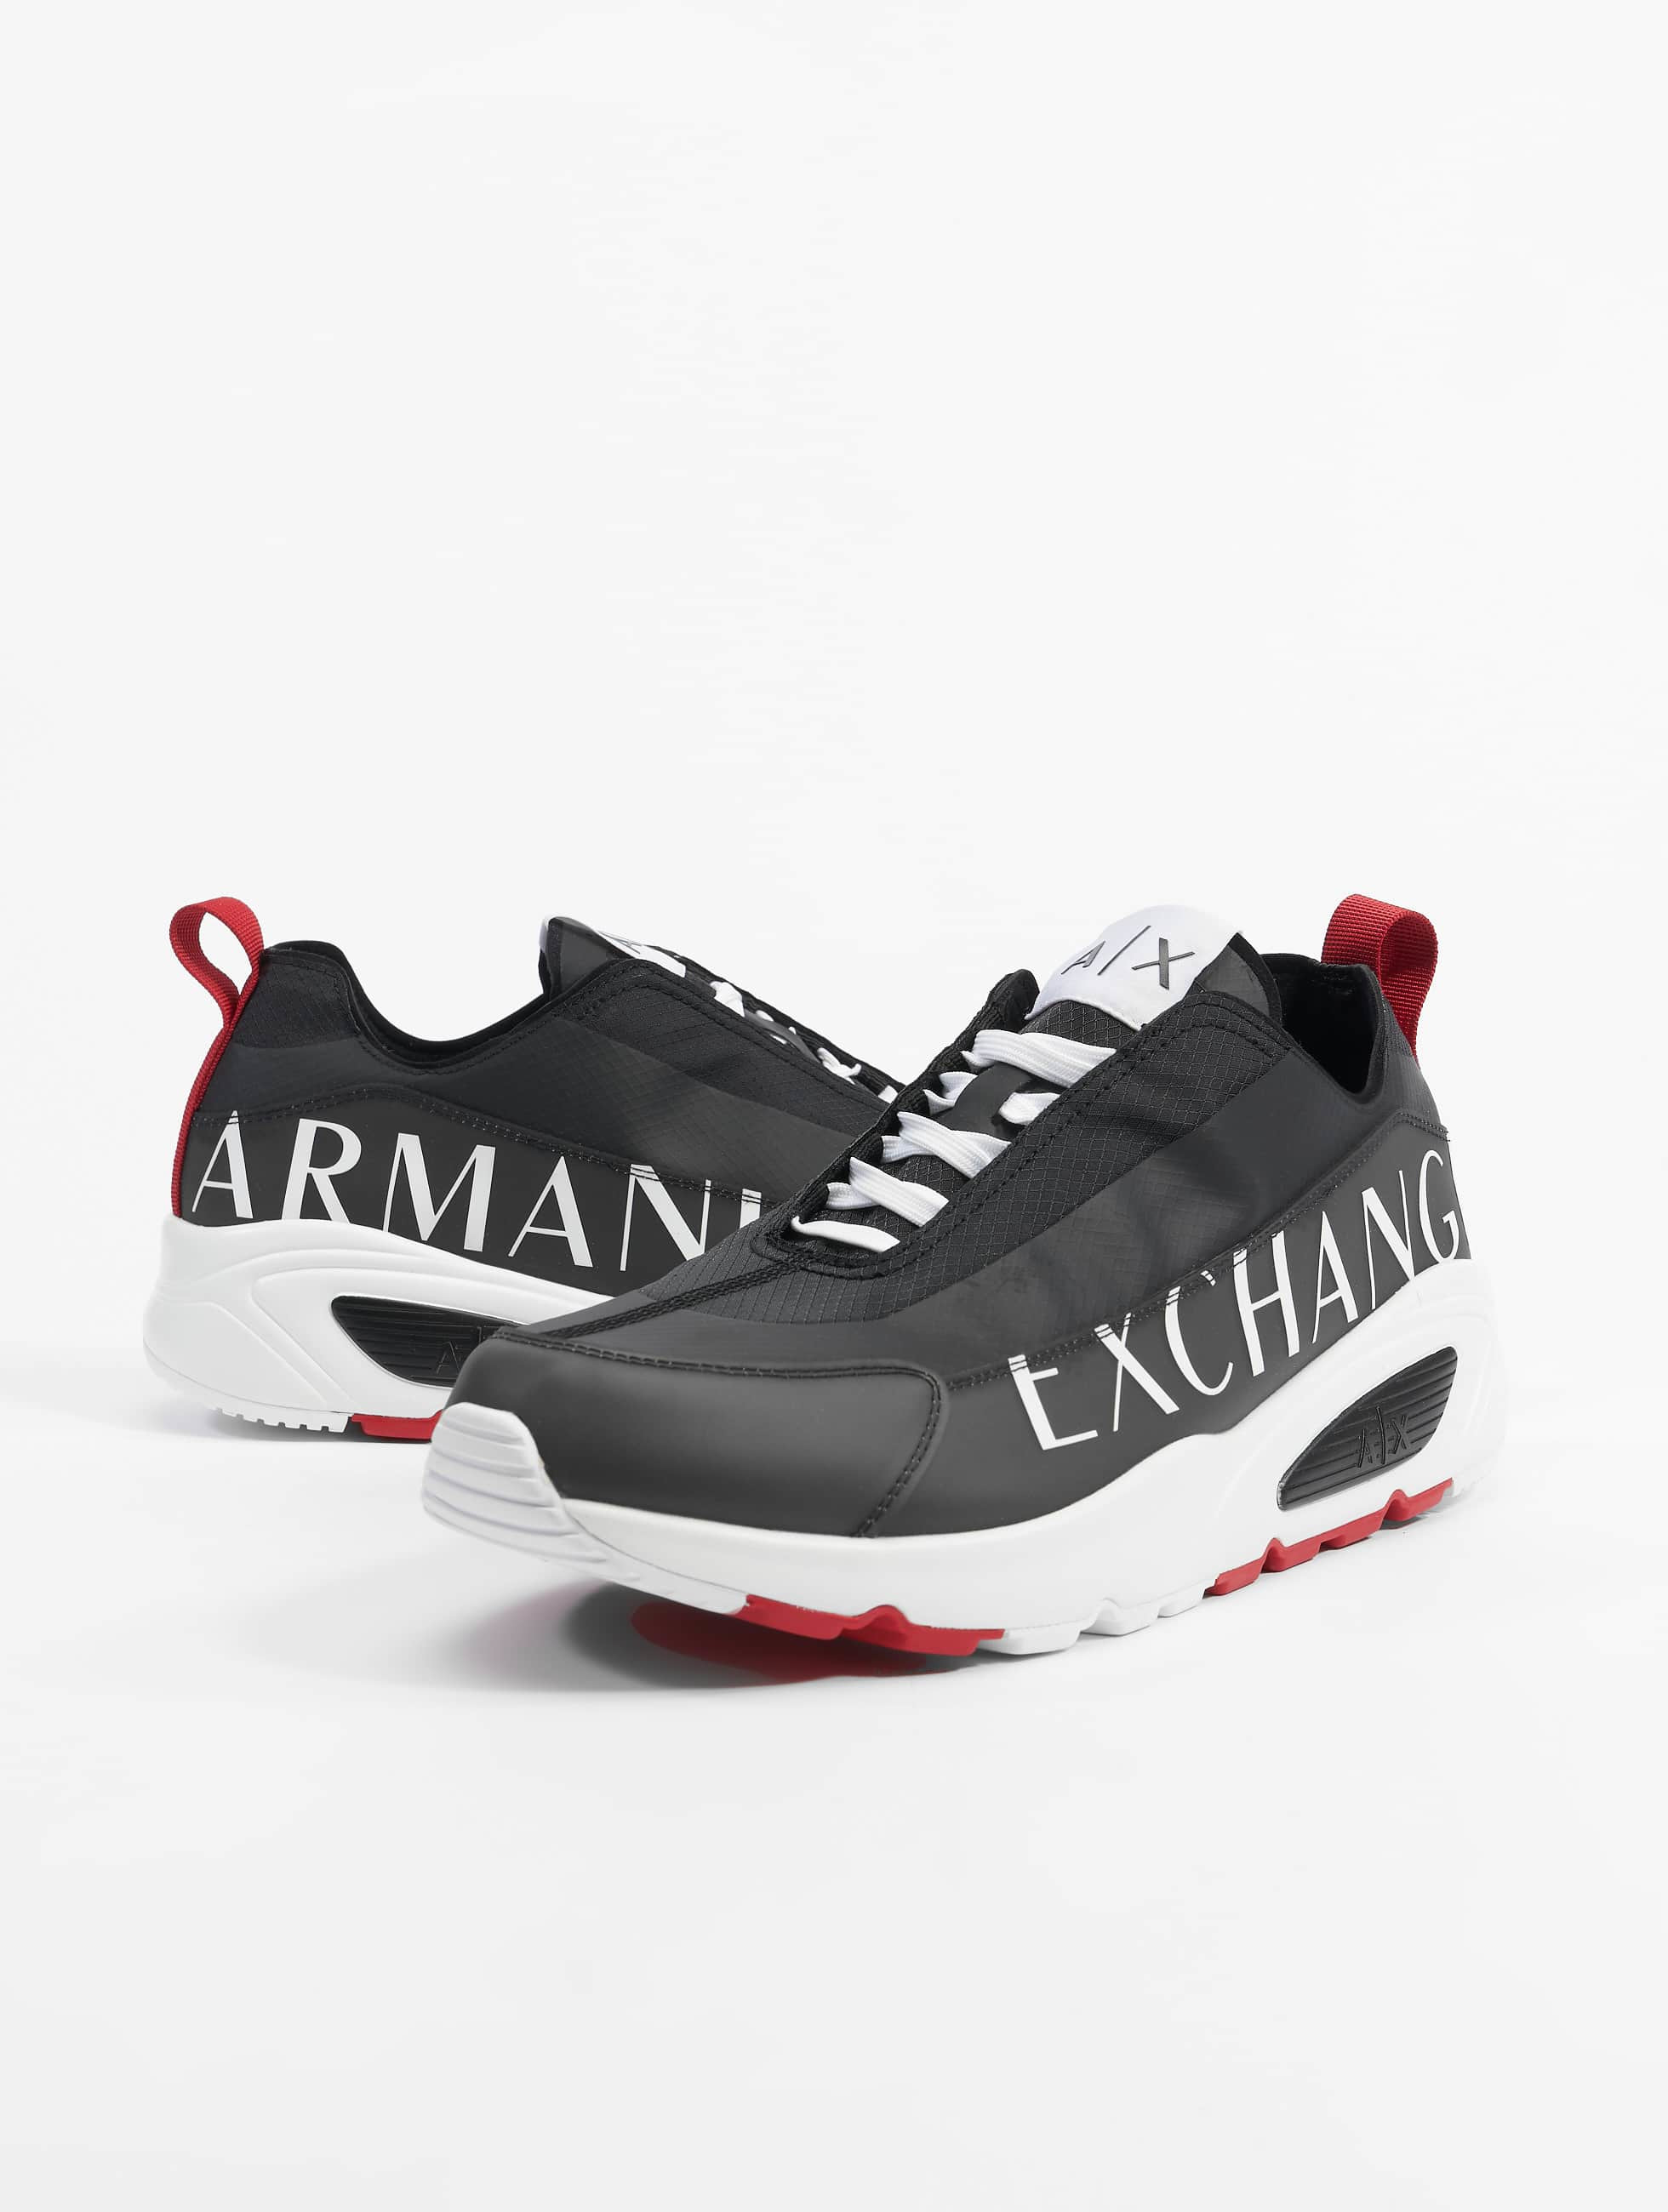 houding Sicilië Depressie Armani schoen / sneaker Exchange Armani in zwart 904046